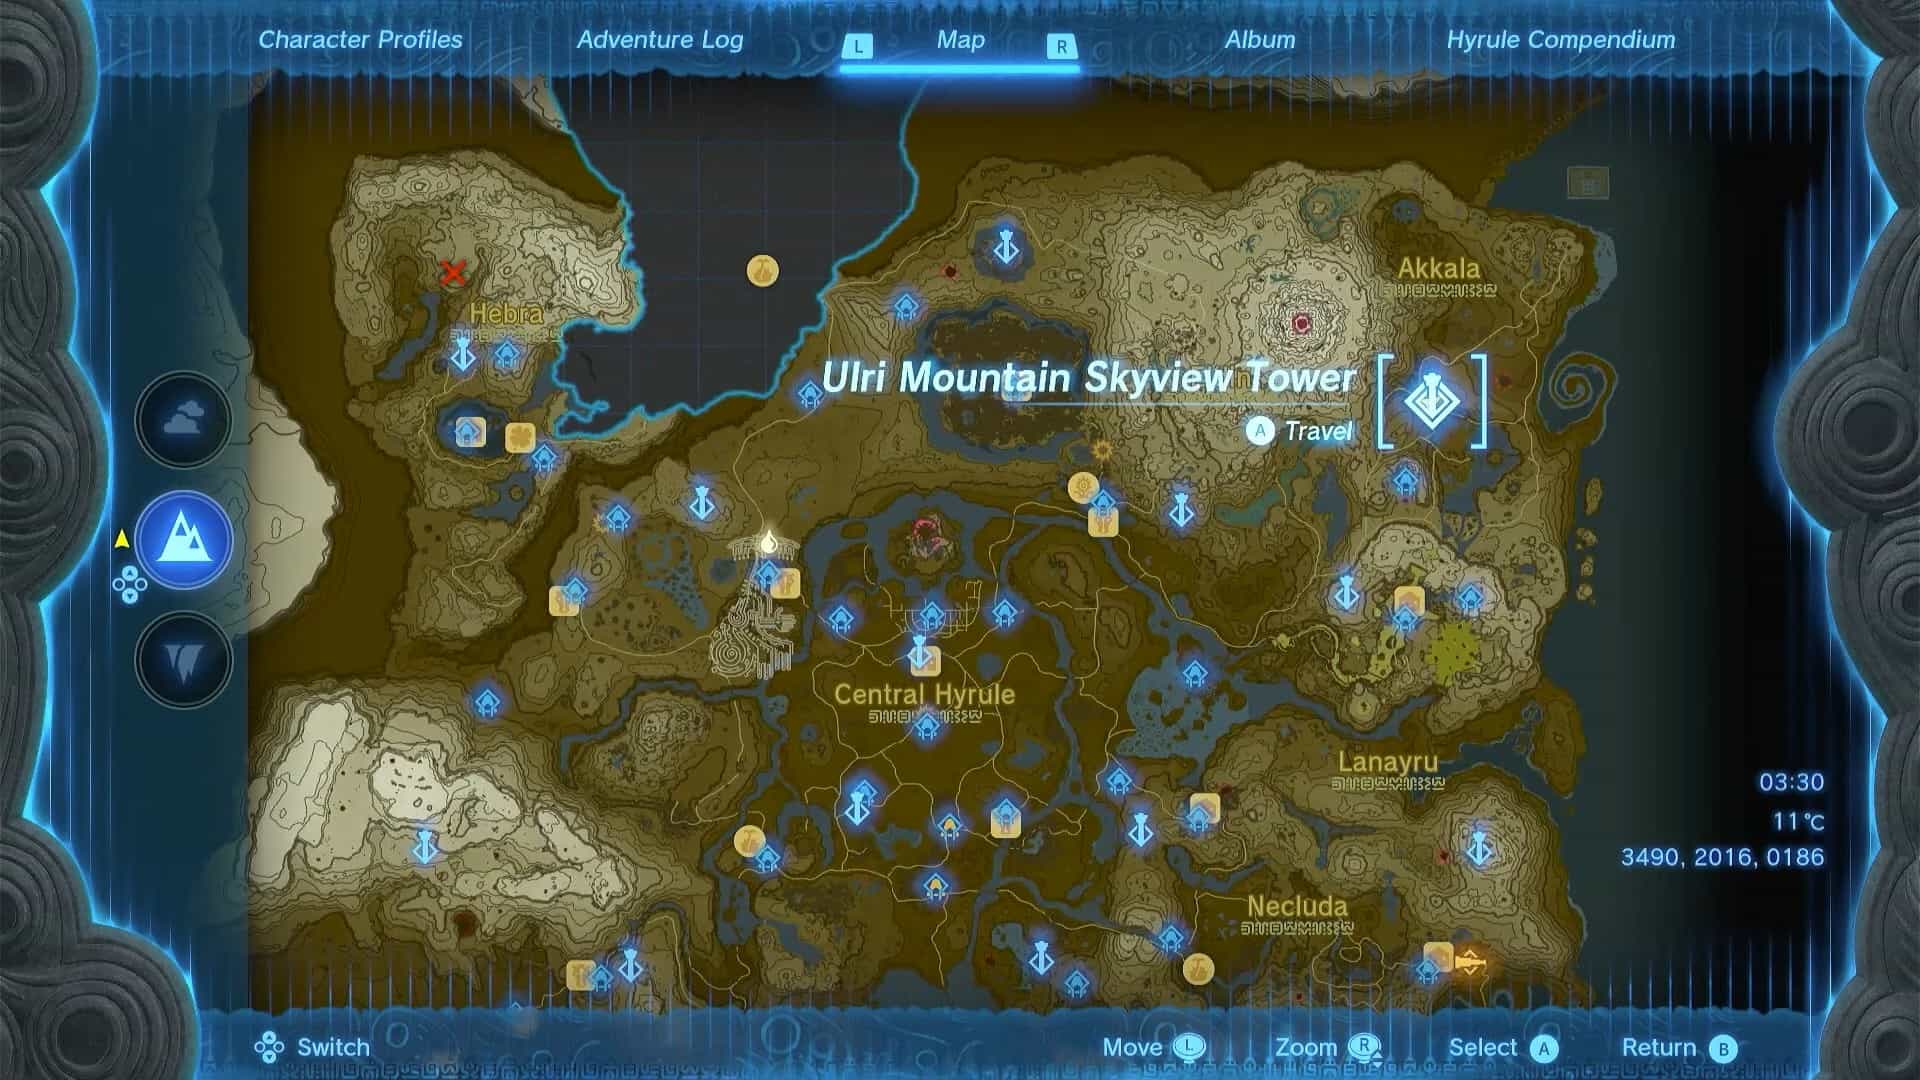 Zelda: TotK Ulri Mountain Skyview Tower location